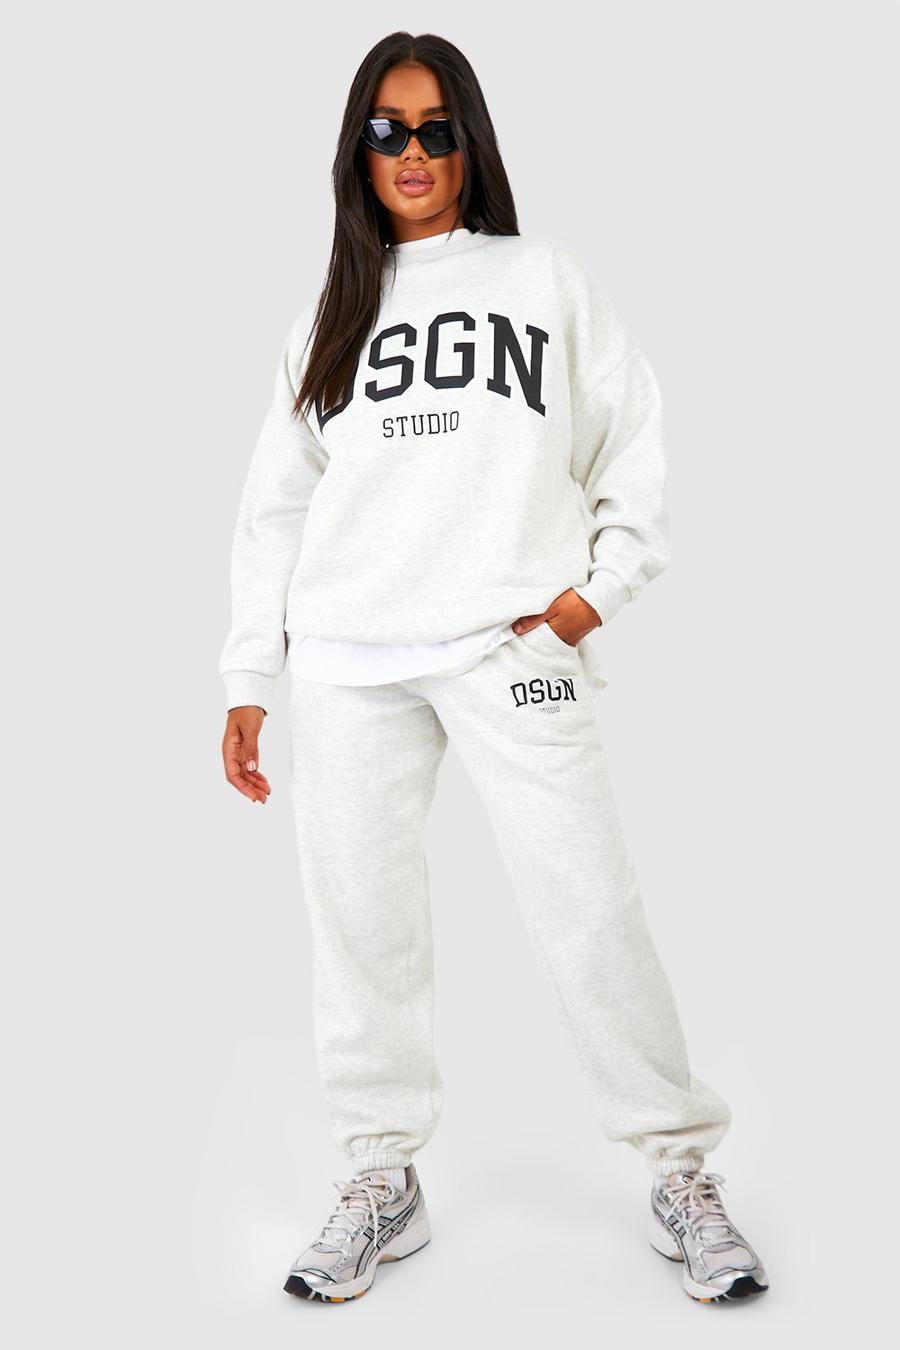 Pantaloni tuta oversize con stampa di slogan Dsgn Studio, Ash grey image number 1